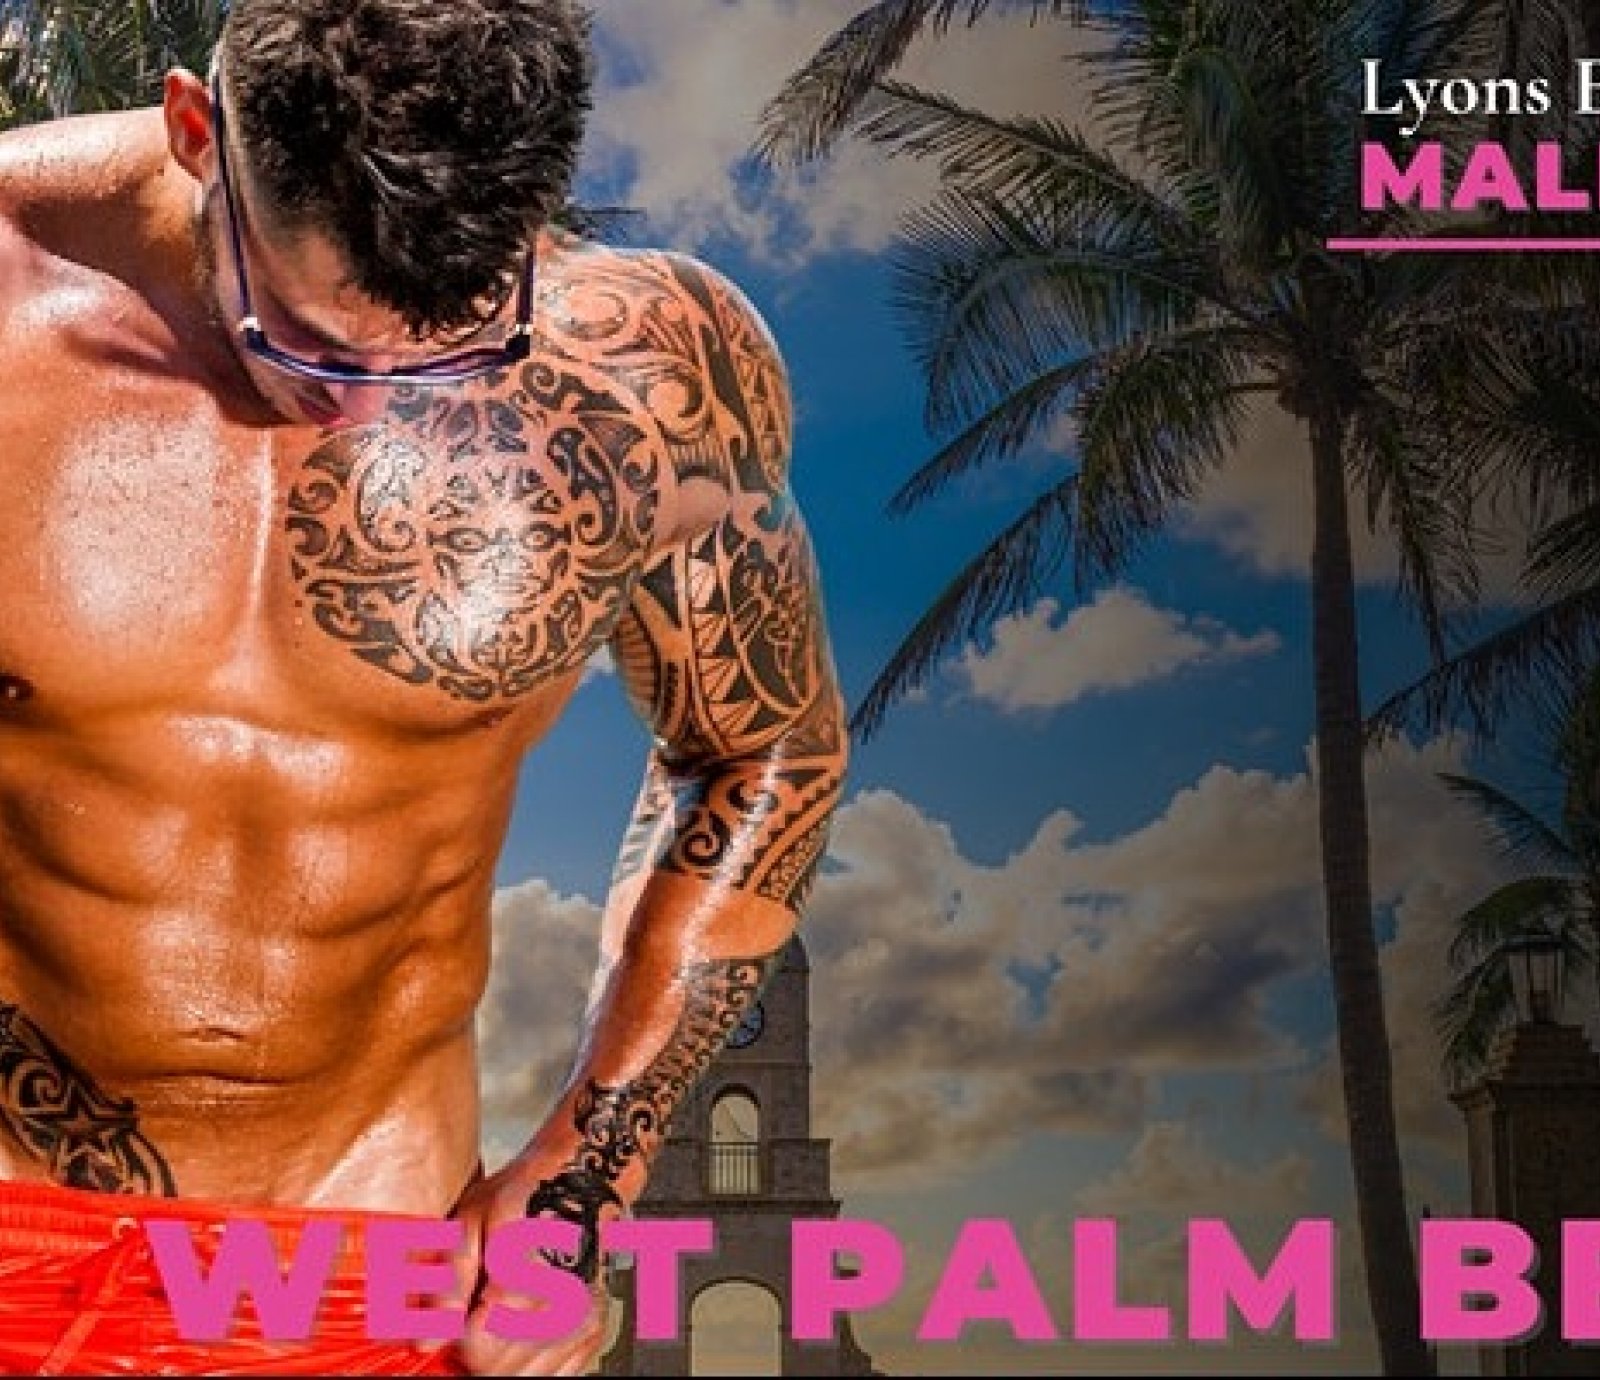 West Palm Beach Male Strip Club